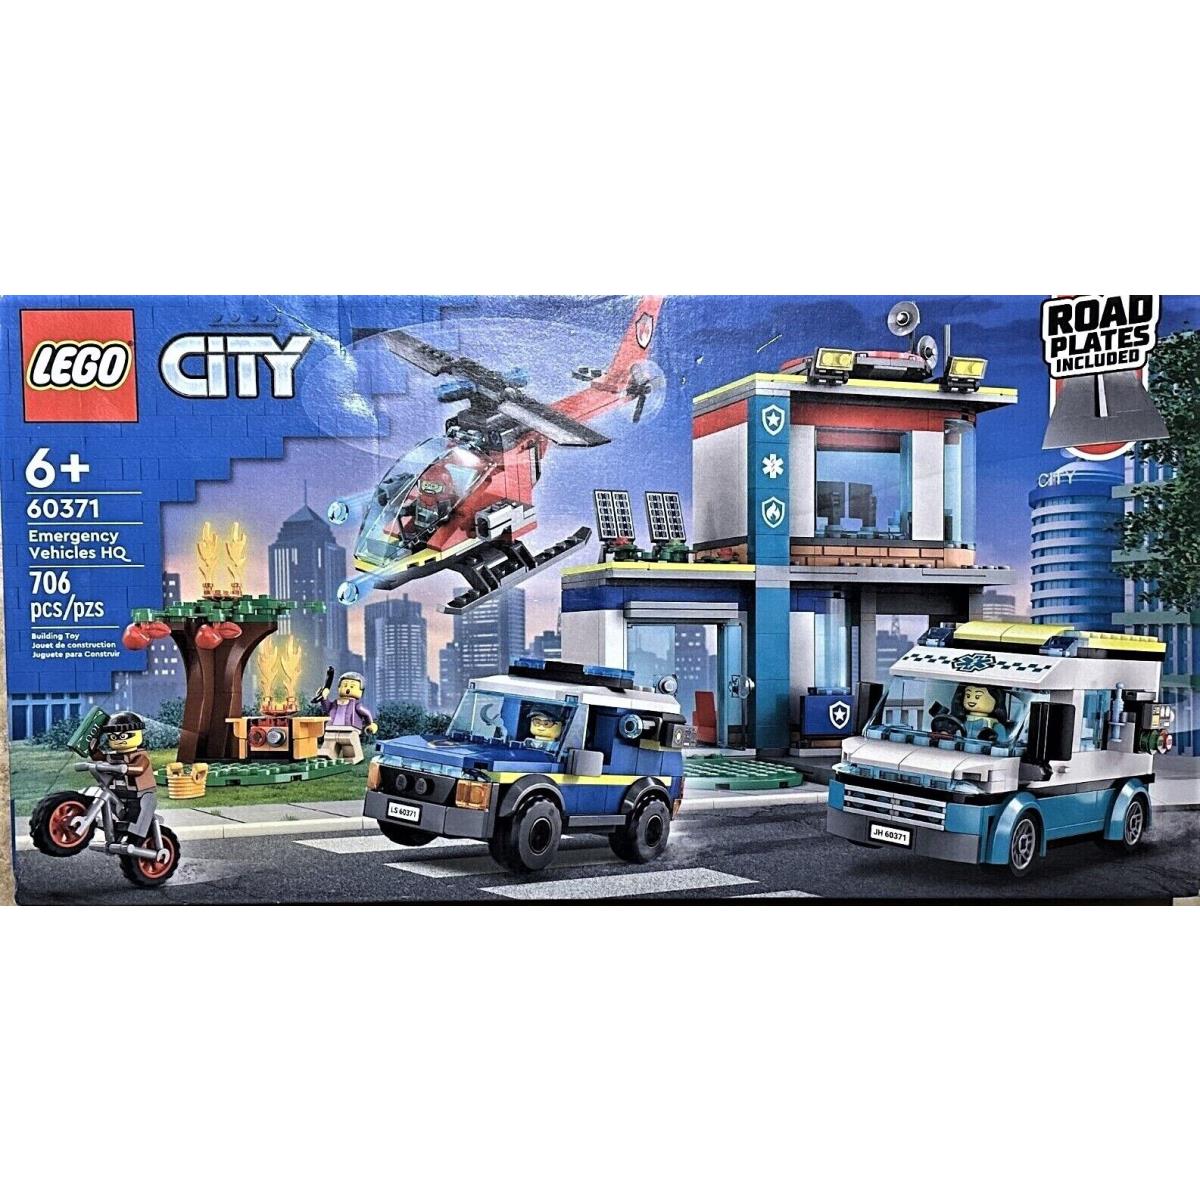 Lego City: 60371 Emergency Vehicles HQ Building Toy Misb